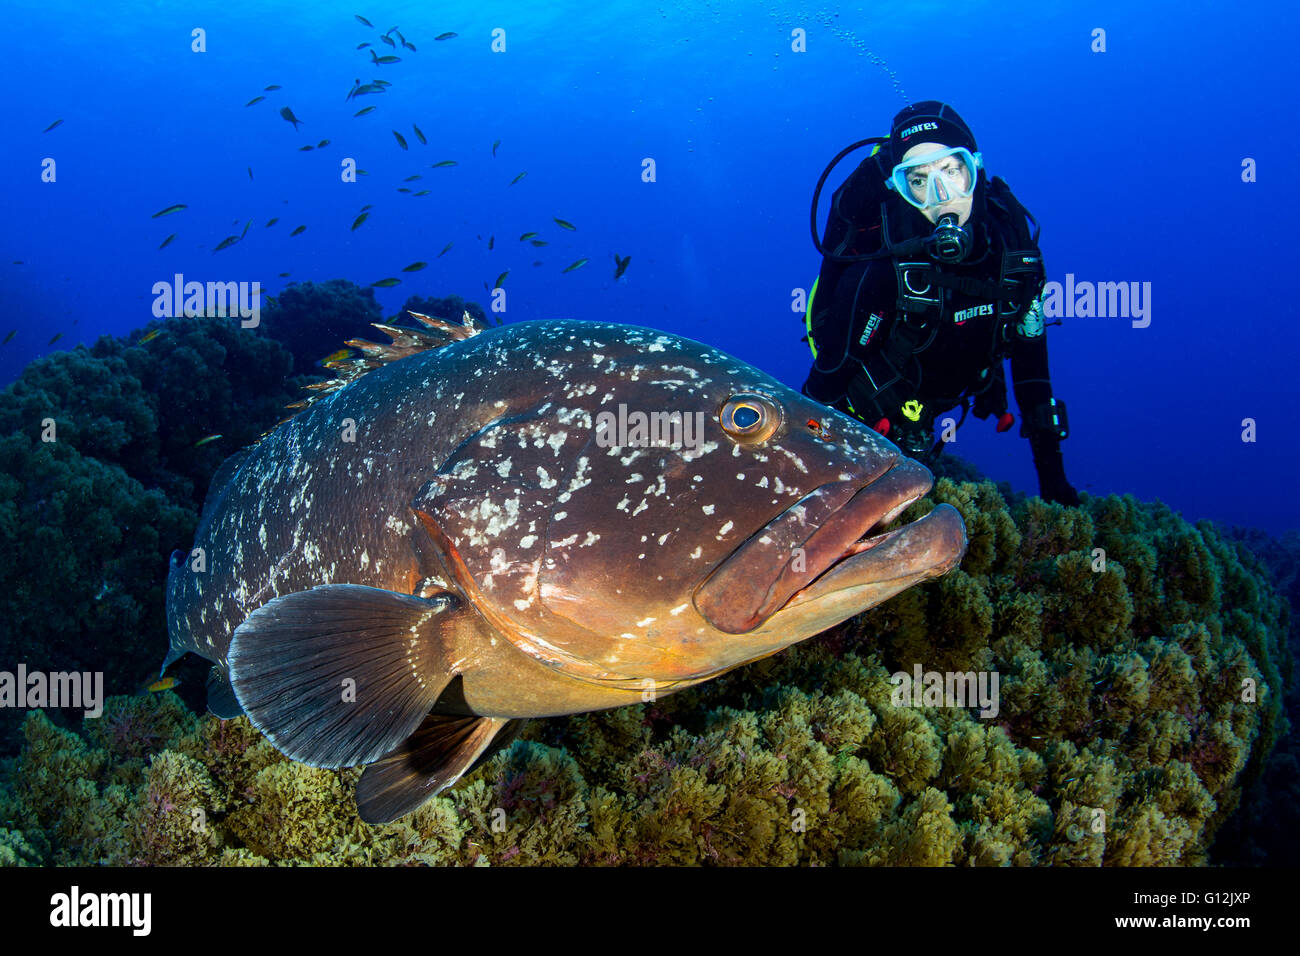 Scuba Diver and Dusky Grouper, Epinephelus marginatus, Formigas, Azores, Portugal Stock Photo